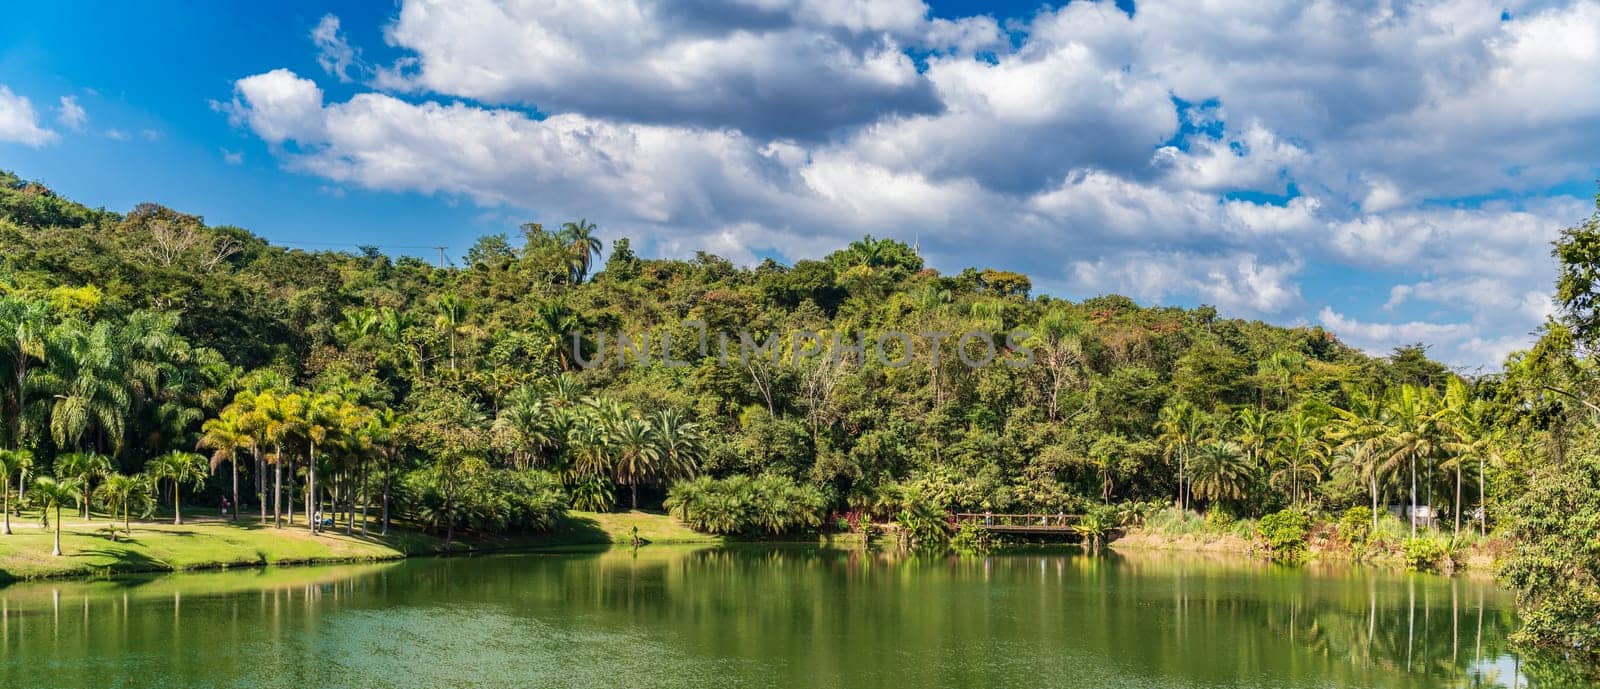 Serene Tropical Lake with Lush Greenery and Blue Sky by FerradalFCG